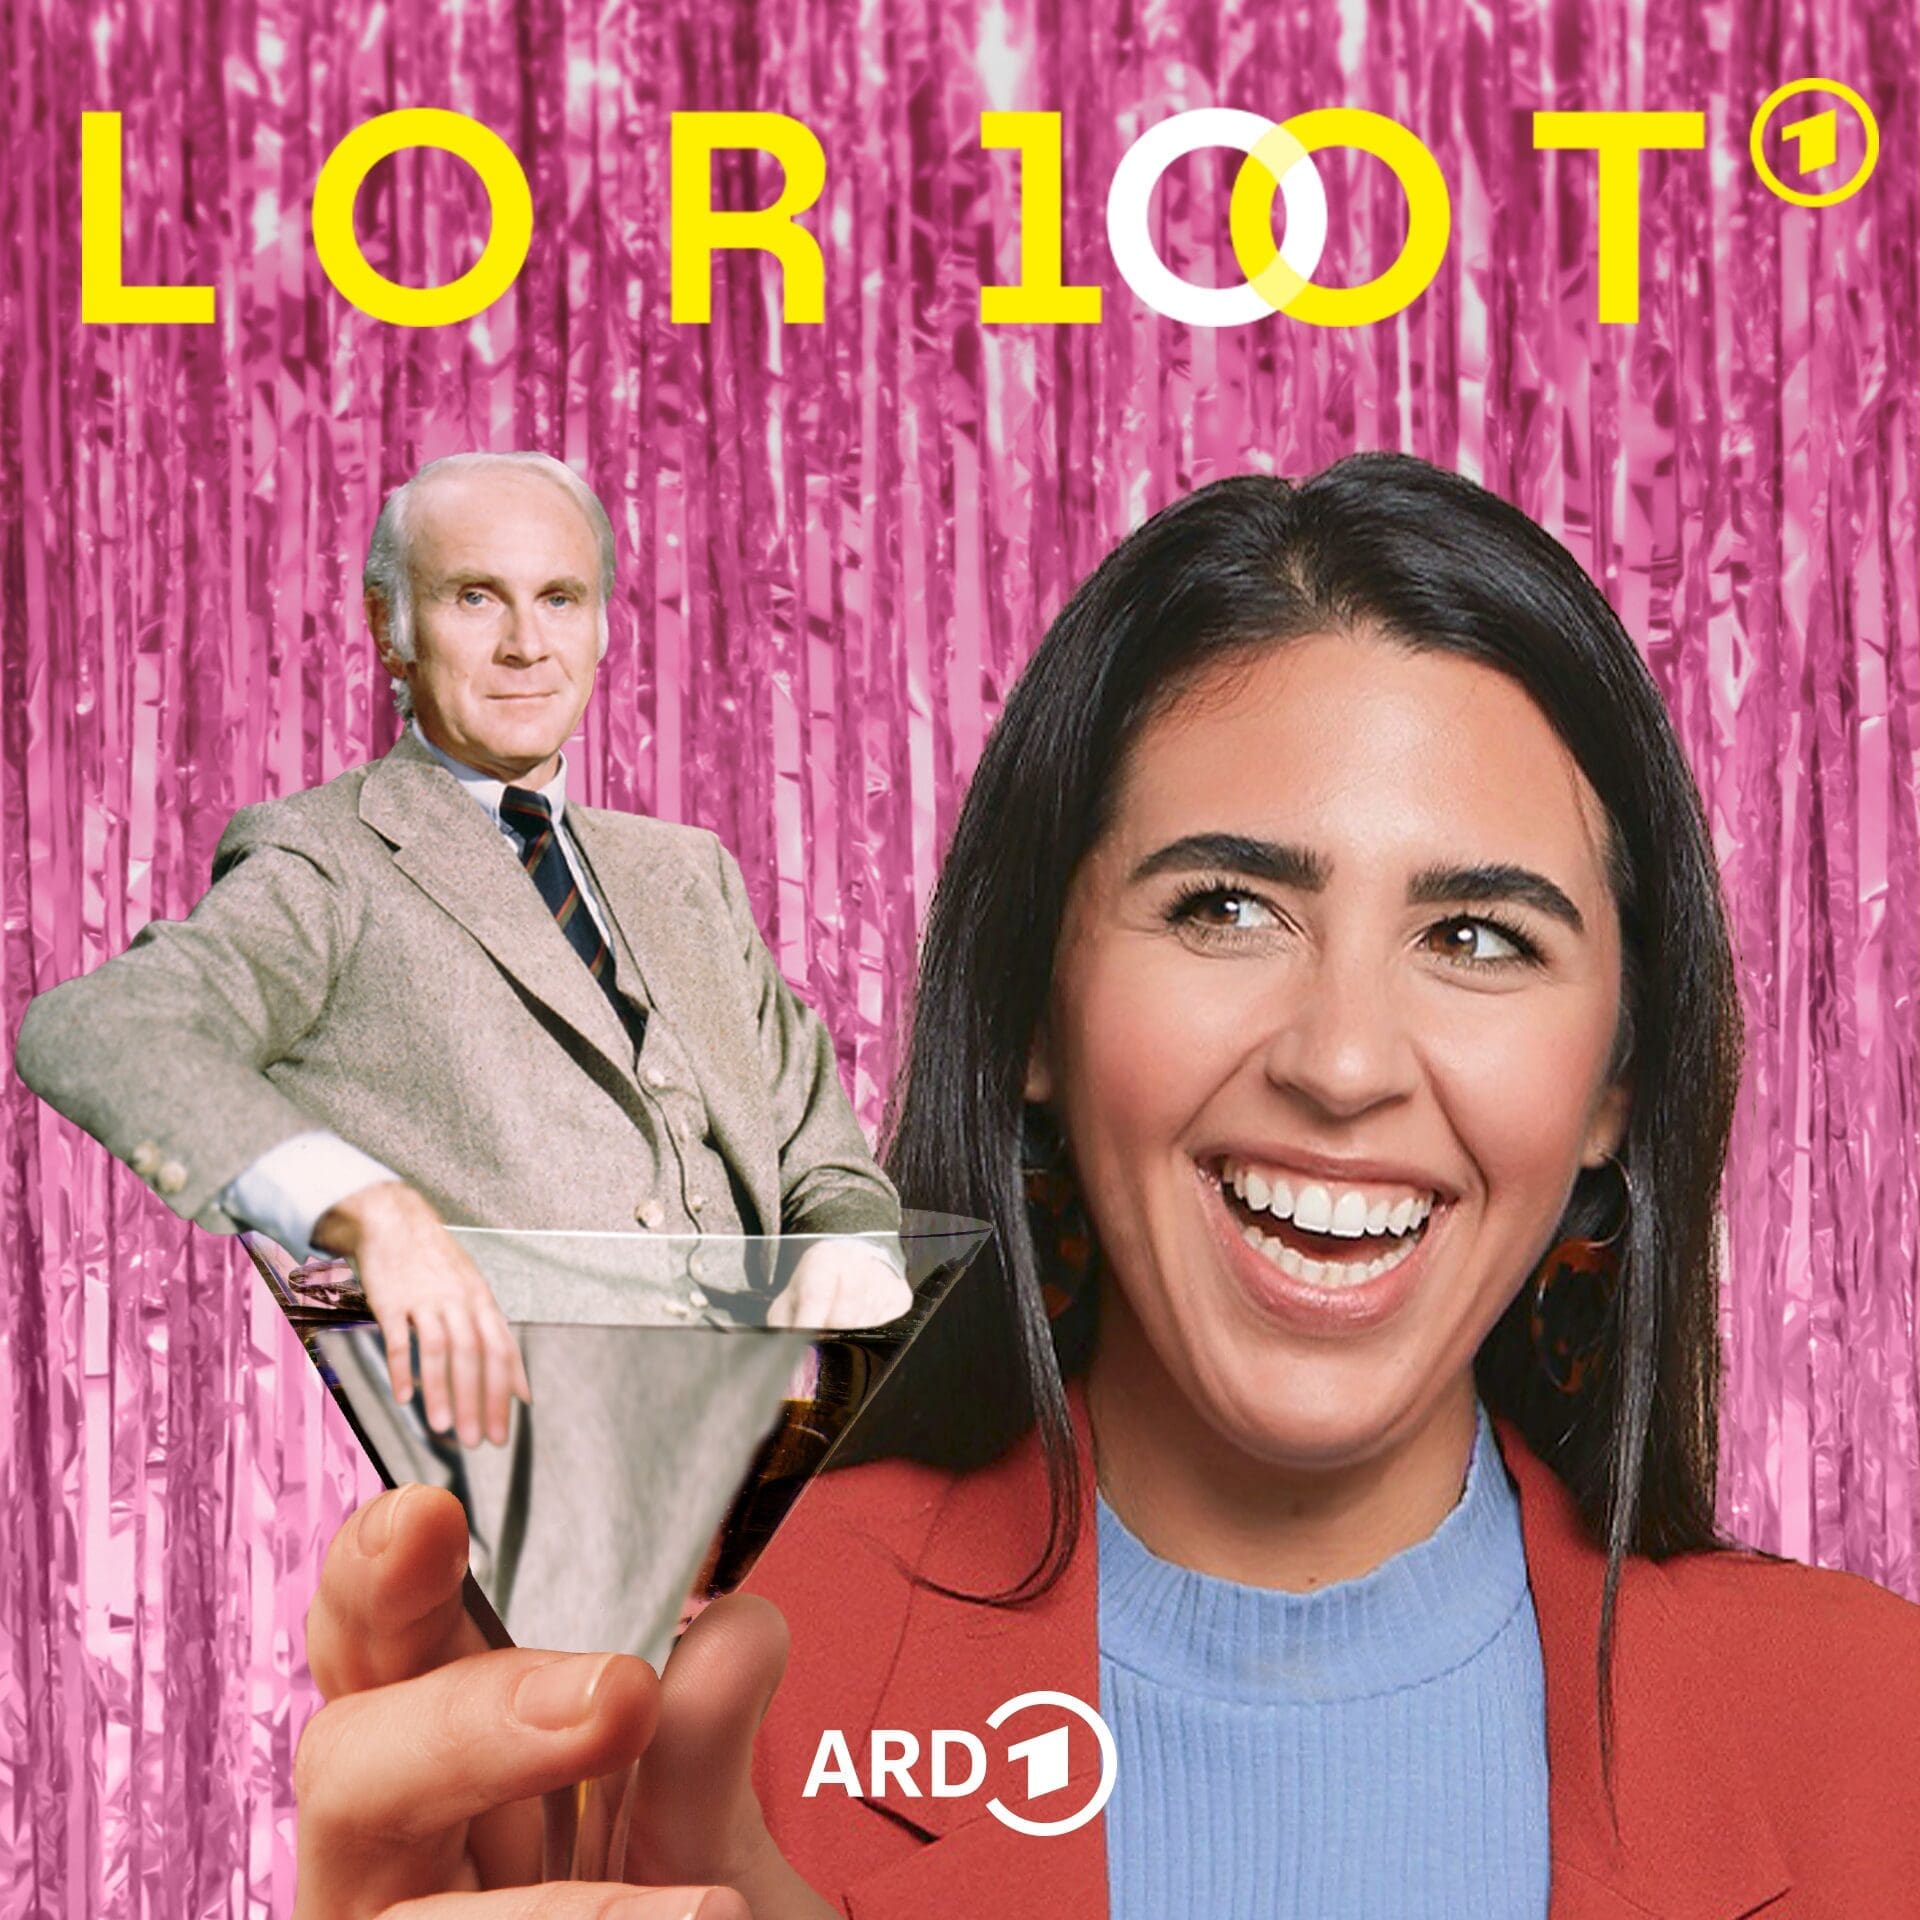 Podcastcover: Loriot 100 - mehr Lametta mit Ariana Baborie, produziert von BosePark Productions in den BosePark Podcaststudios in Berlin